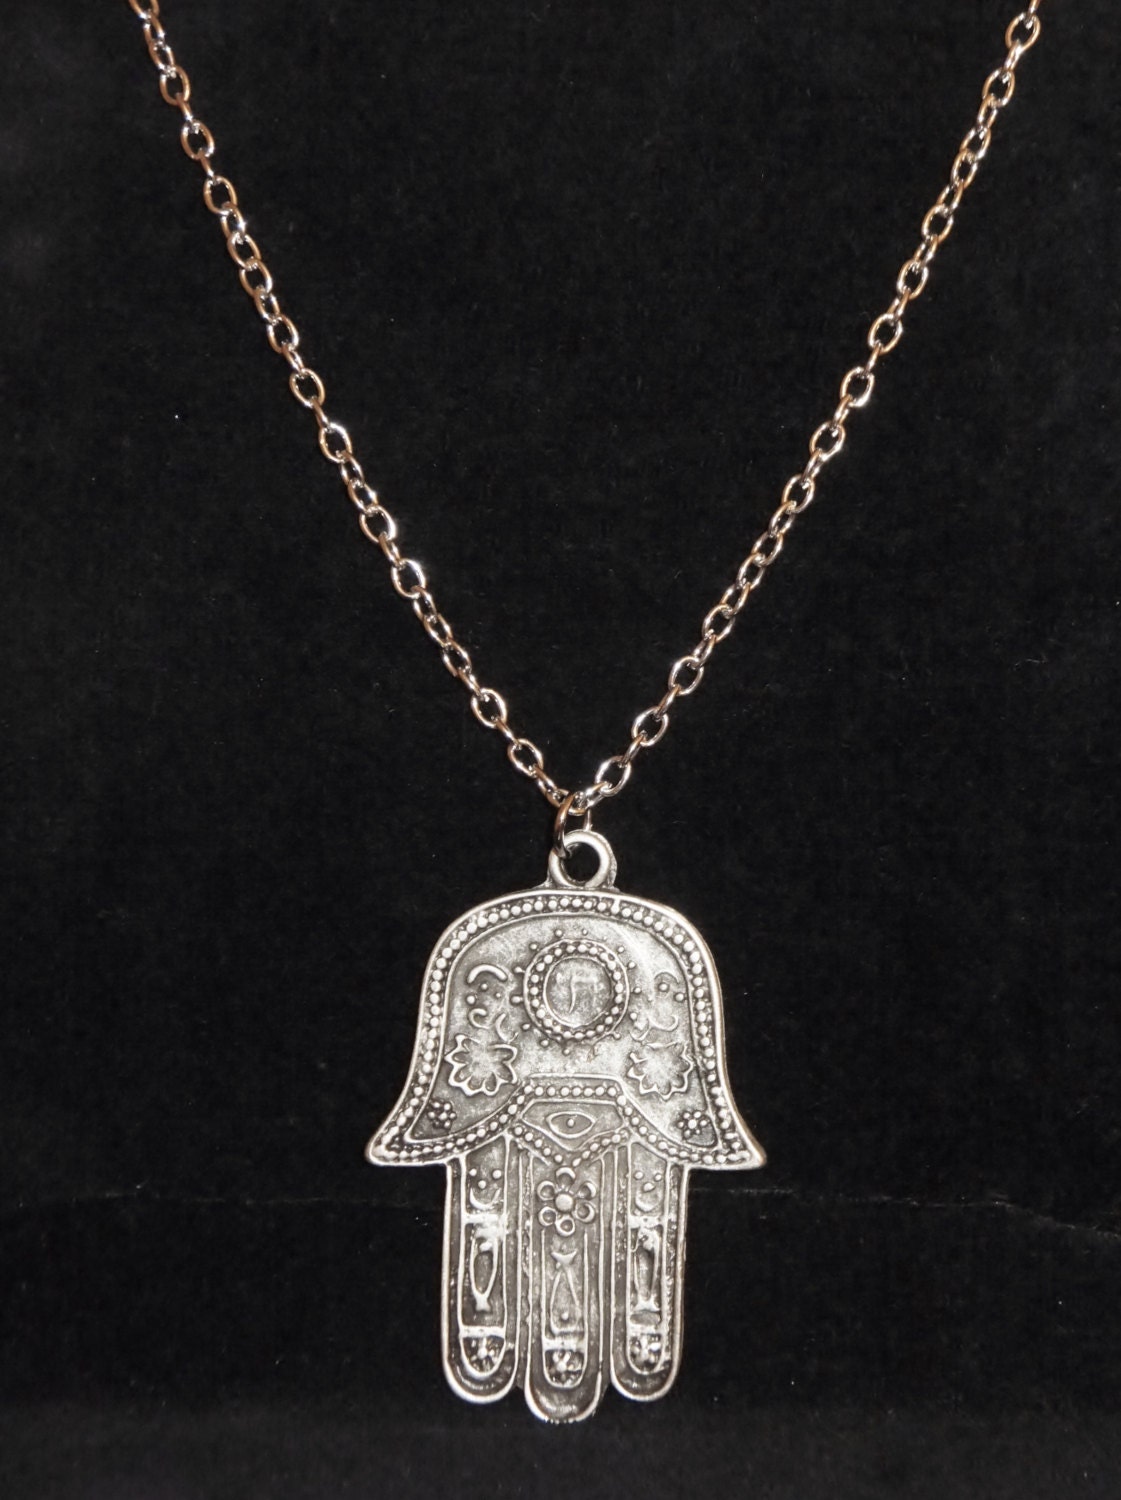 Antique Silver Hamsa Hand Necklace Khamsa NecklaceBoho